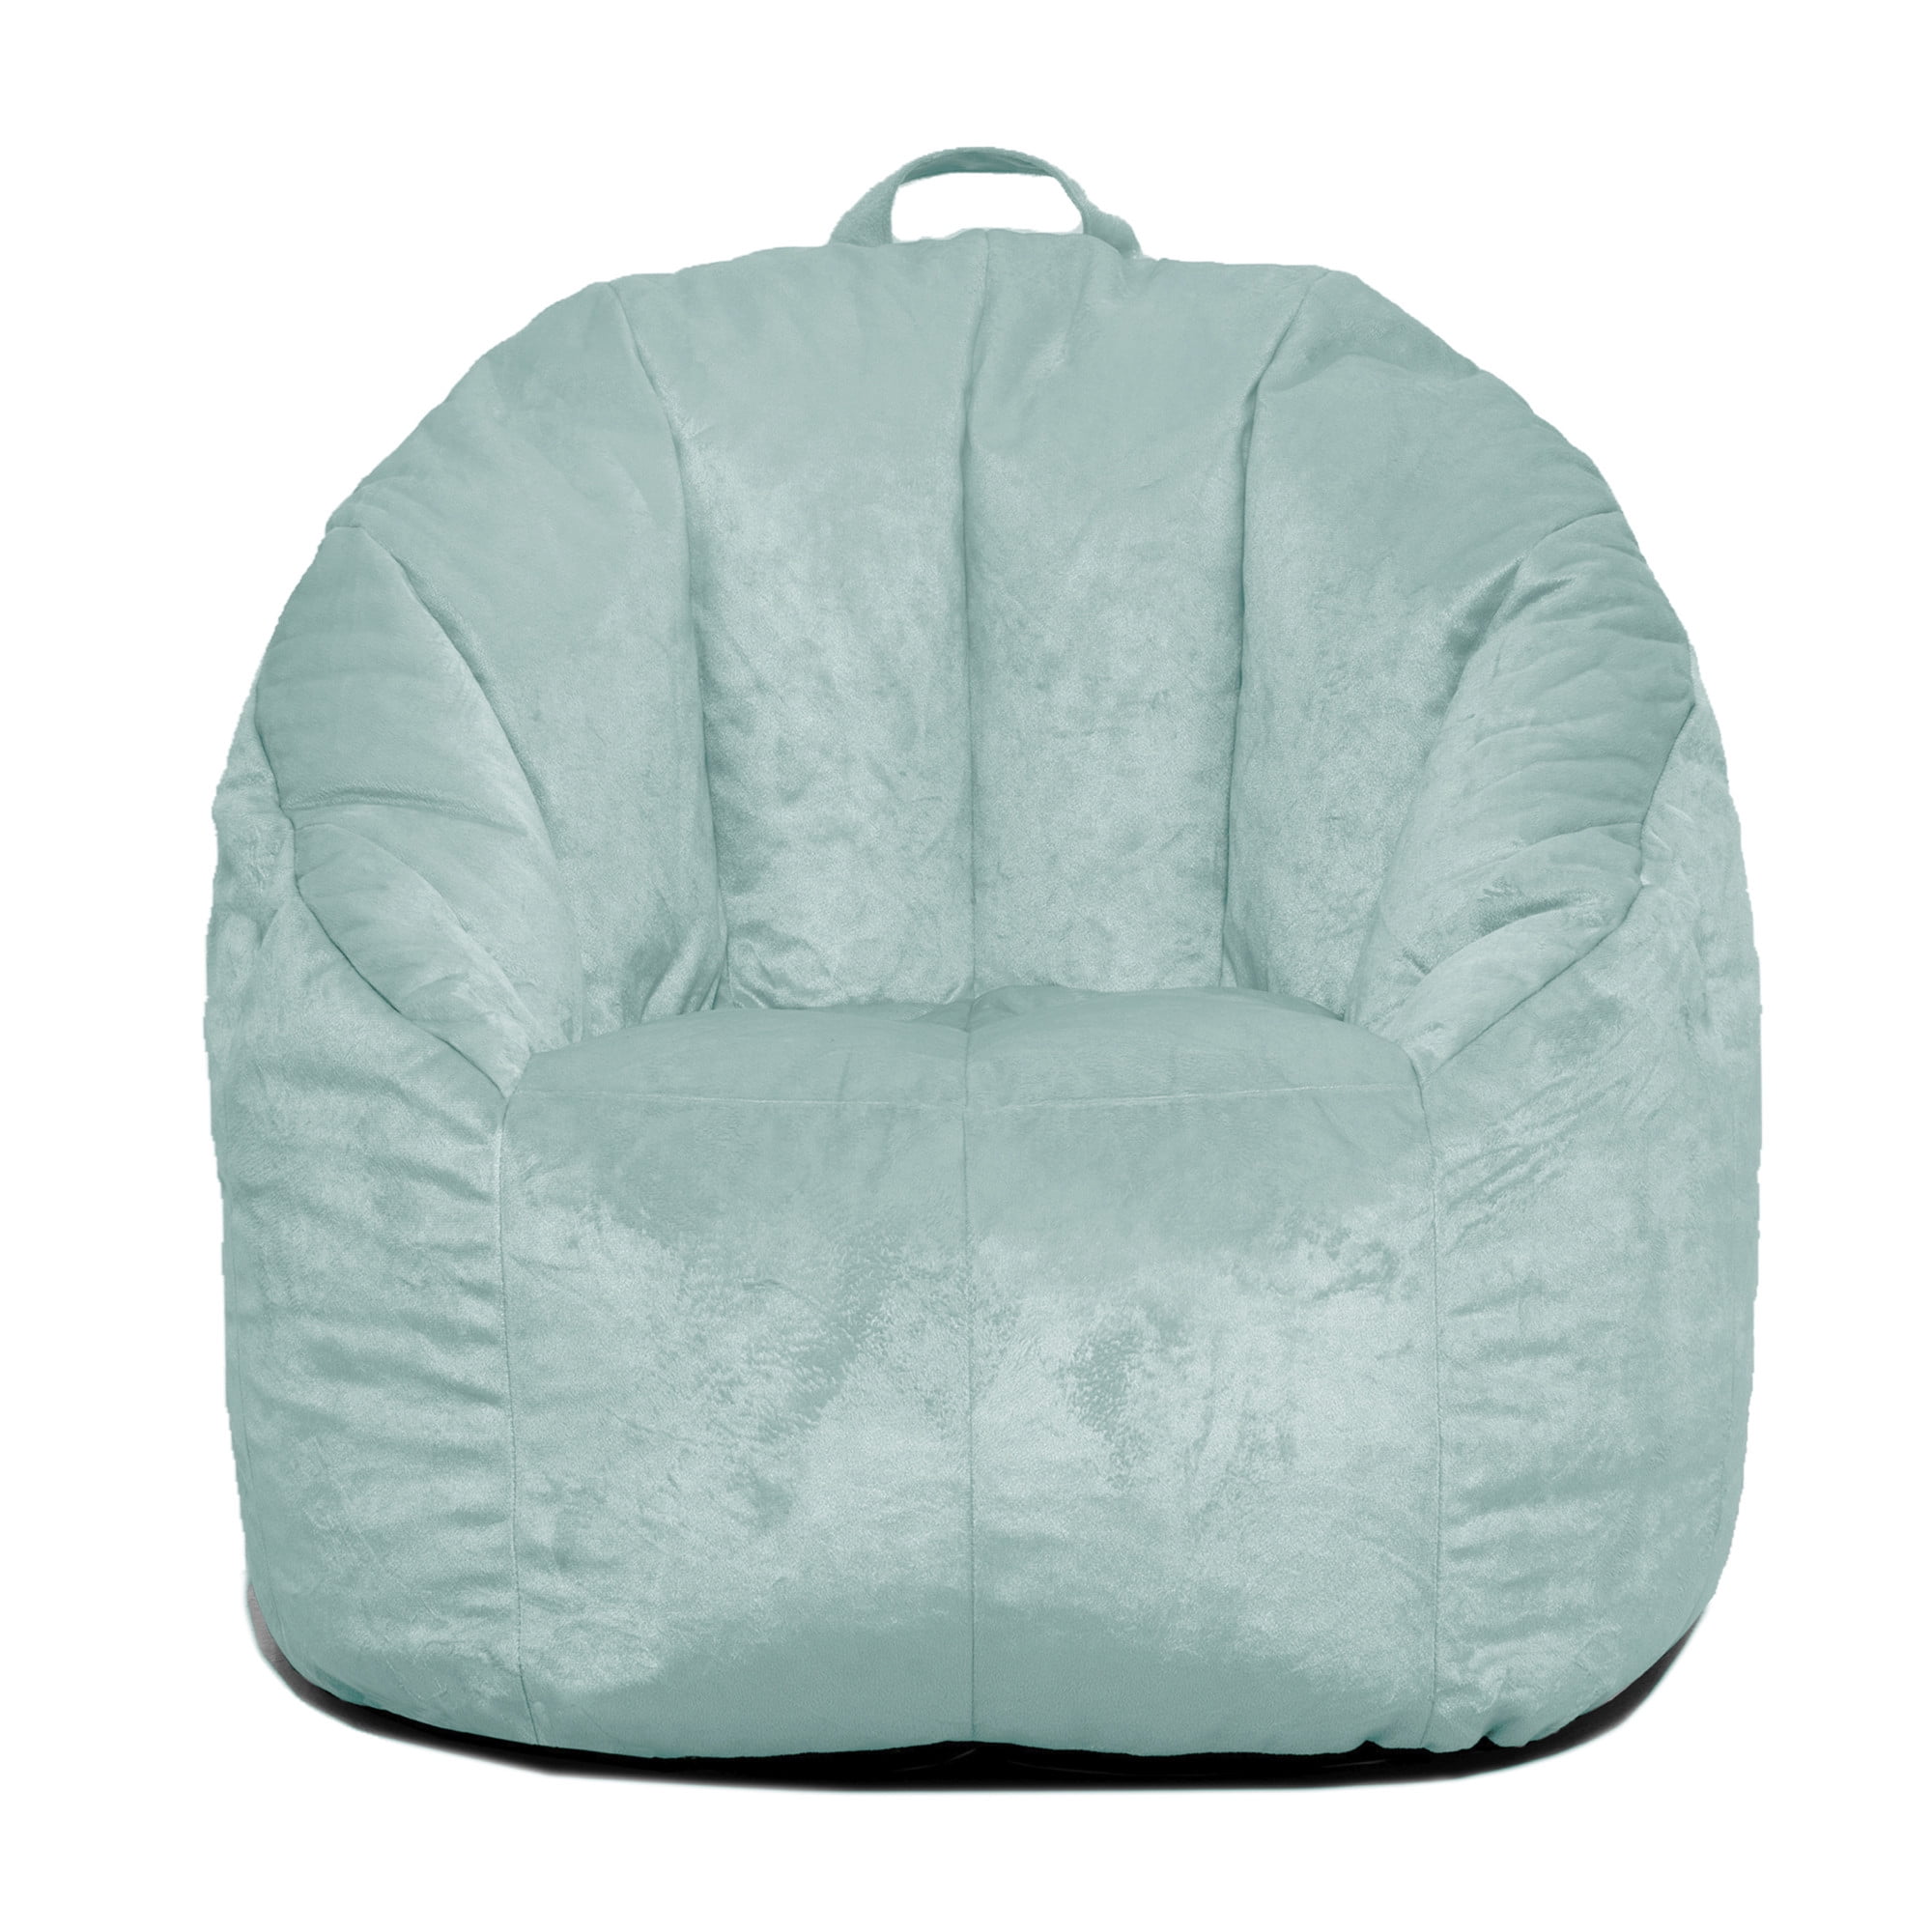 Big Joe Milano Kid's Bean Bag Chair Terrazzo Lenox Size Small